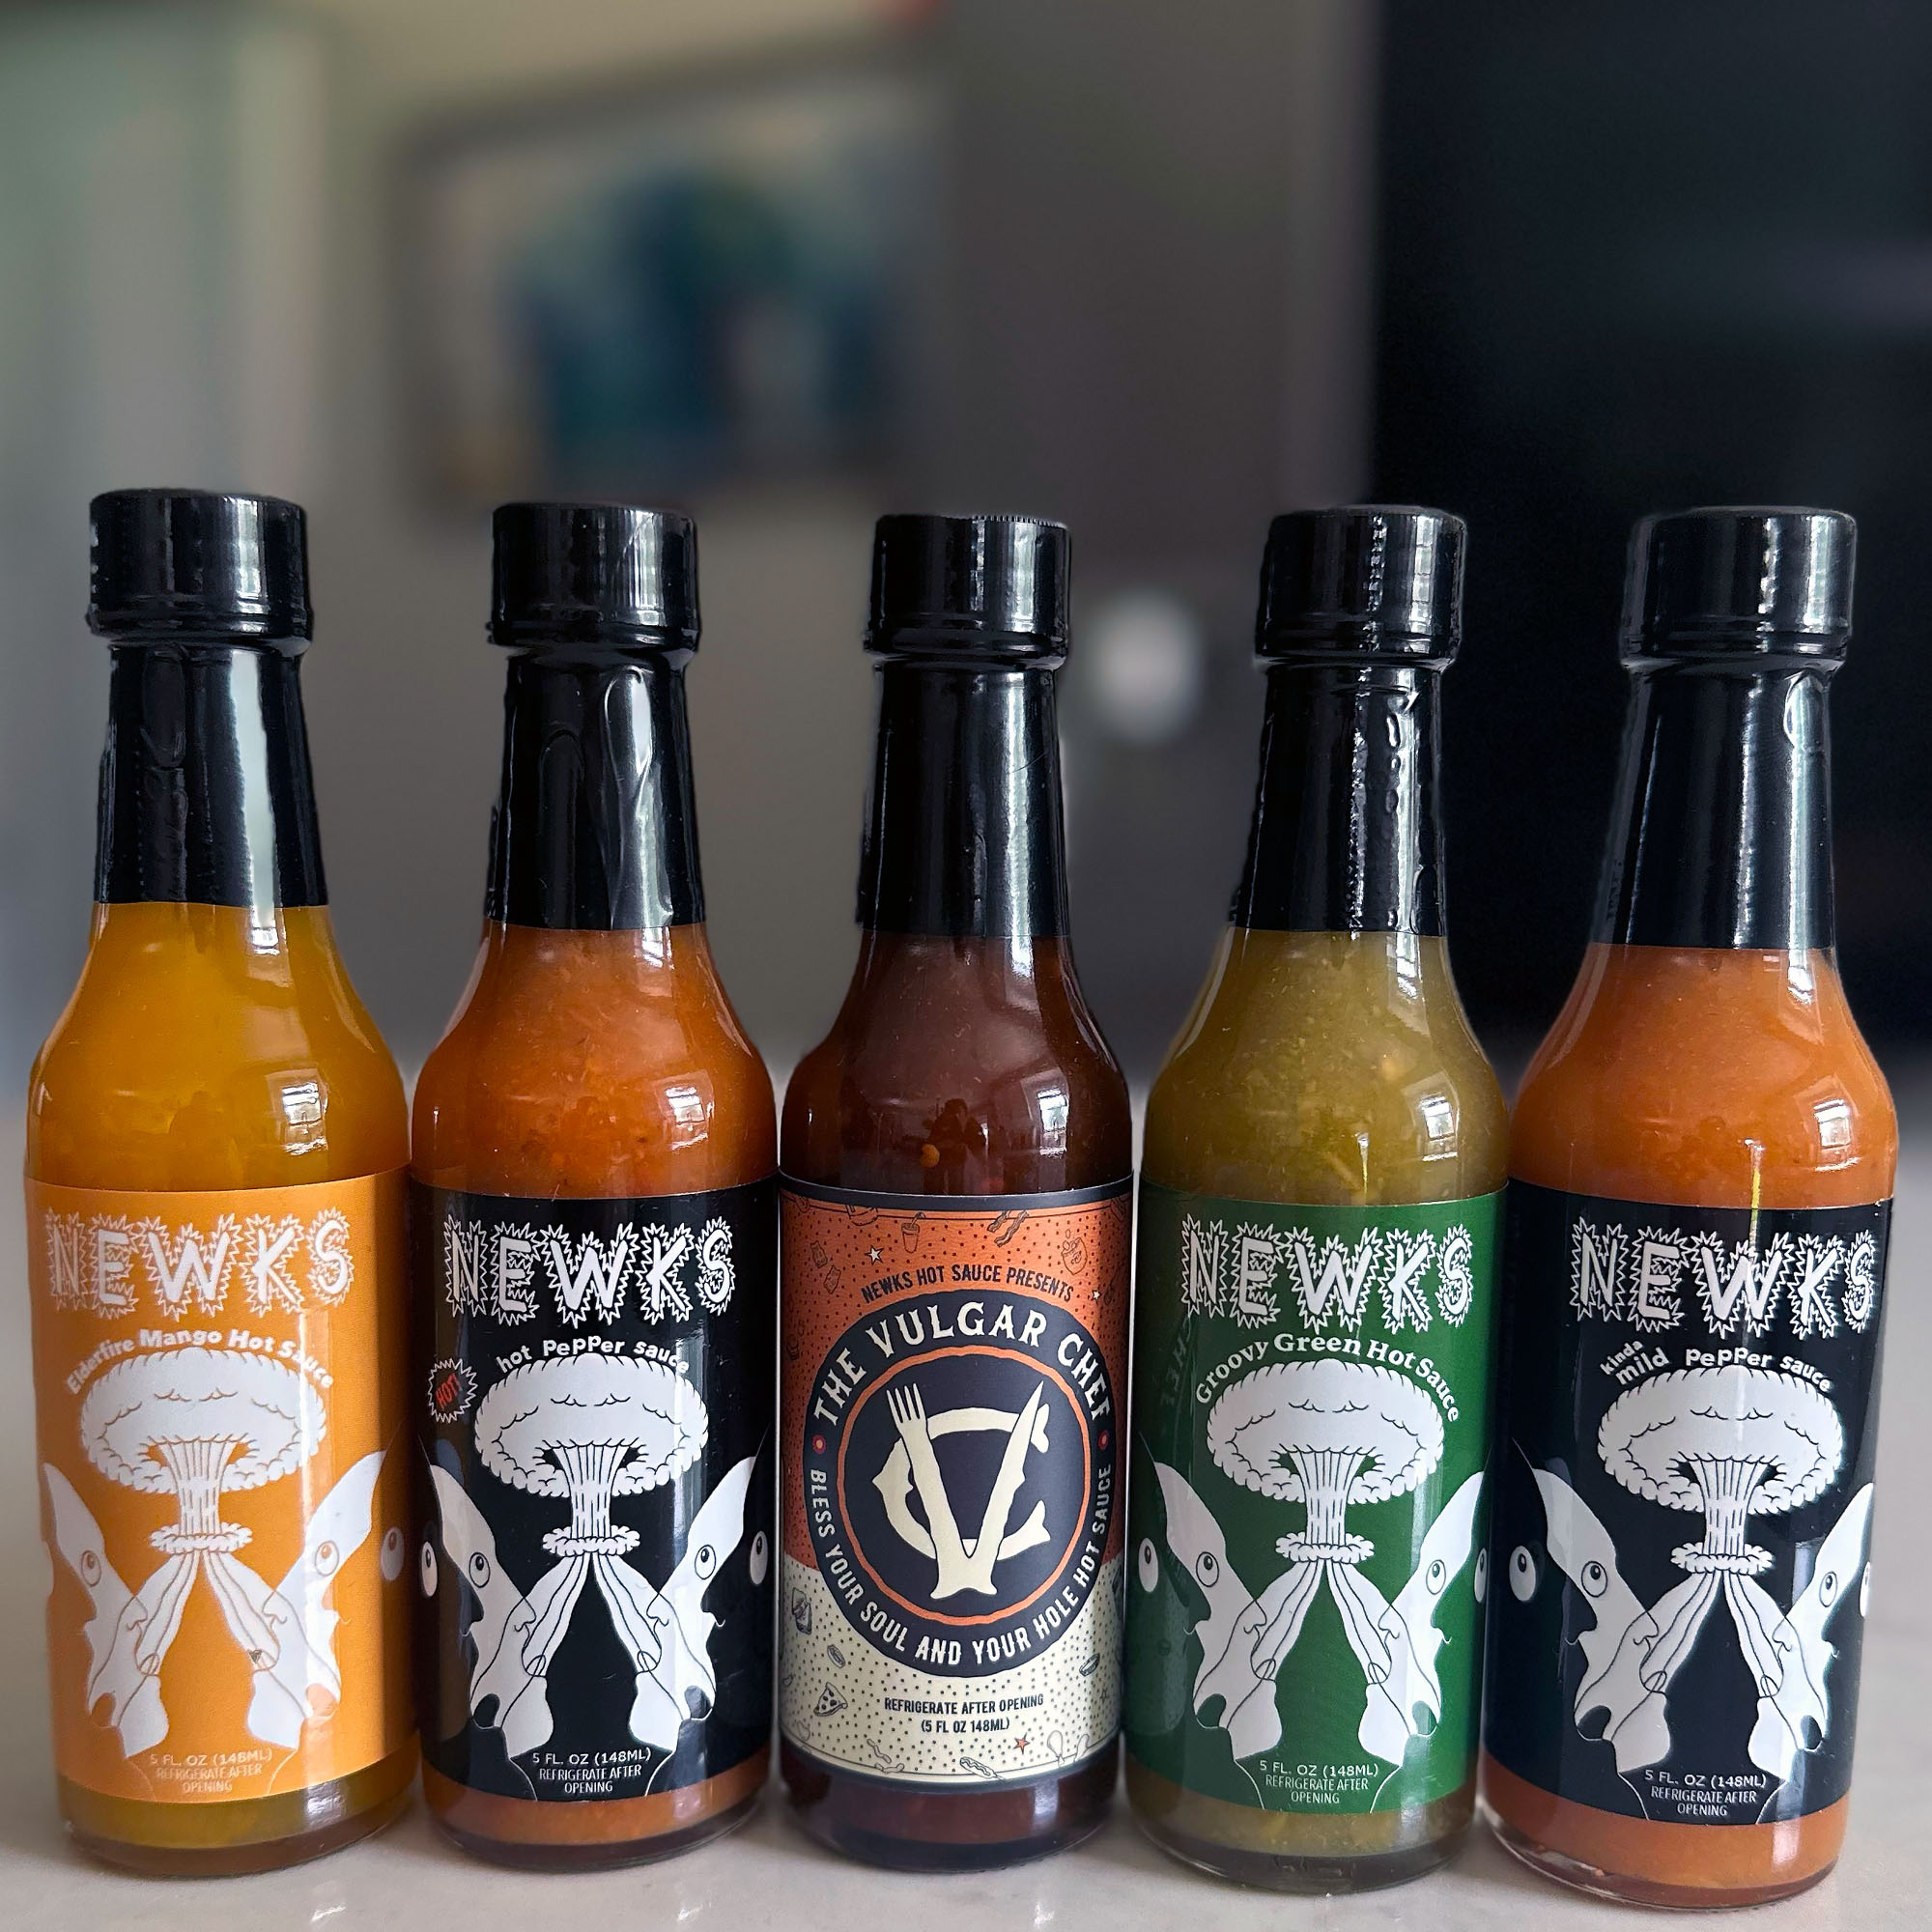 Newk's Hot Sauce